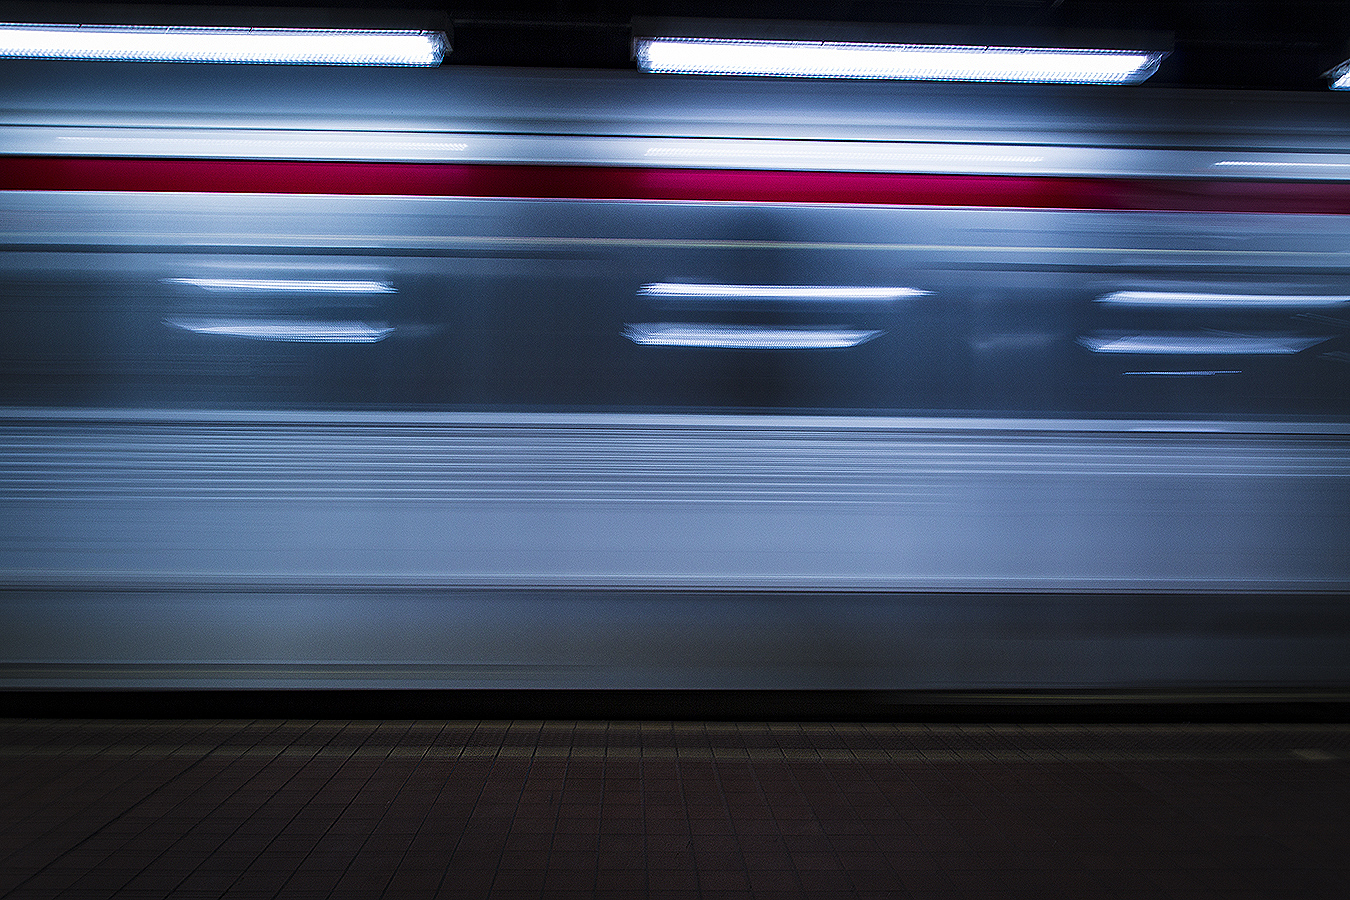 Jacob_Bennett_photography_transience_train_travel_philadelphia_commuters_platforms_danger